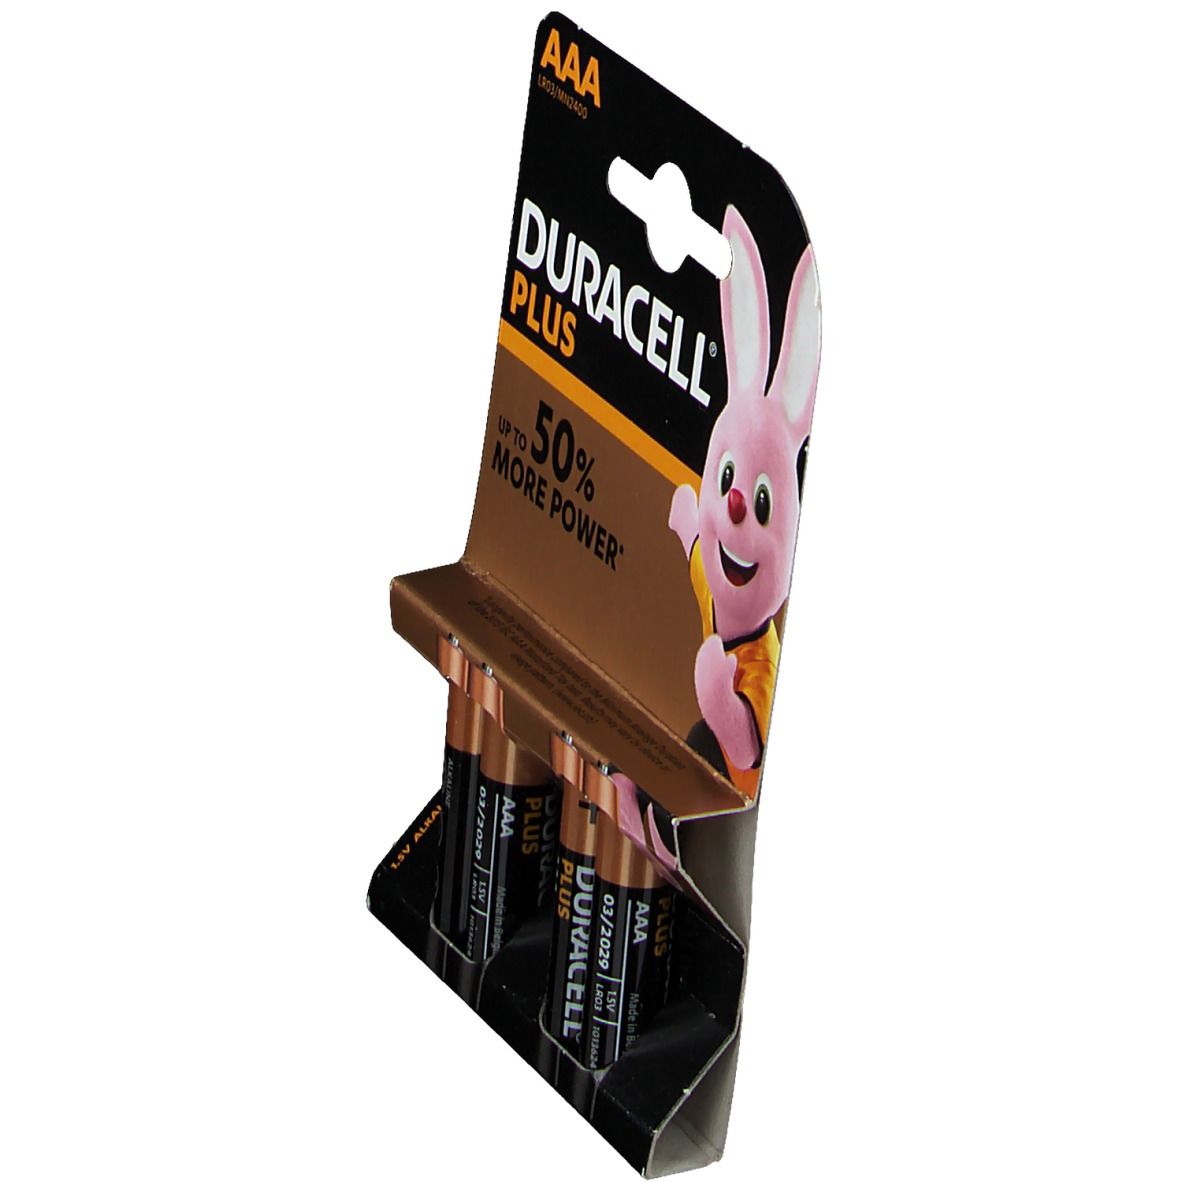 Duracell® Plus Batteria AAA